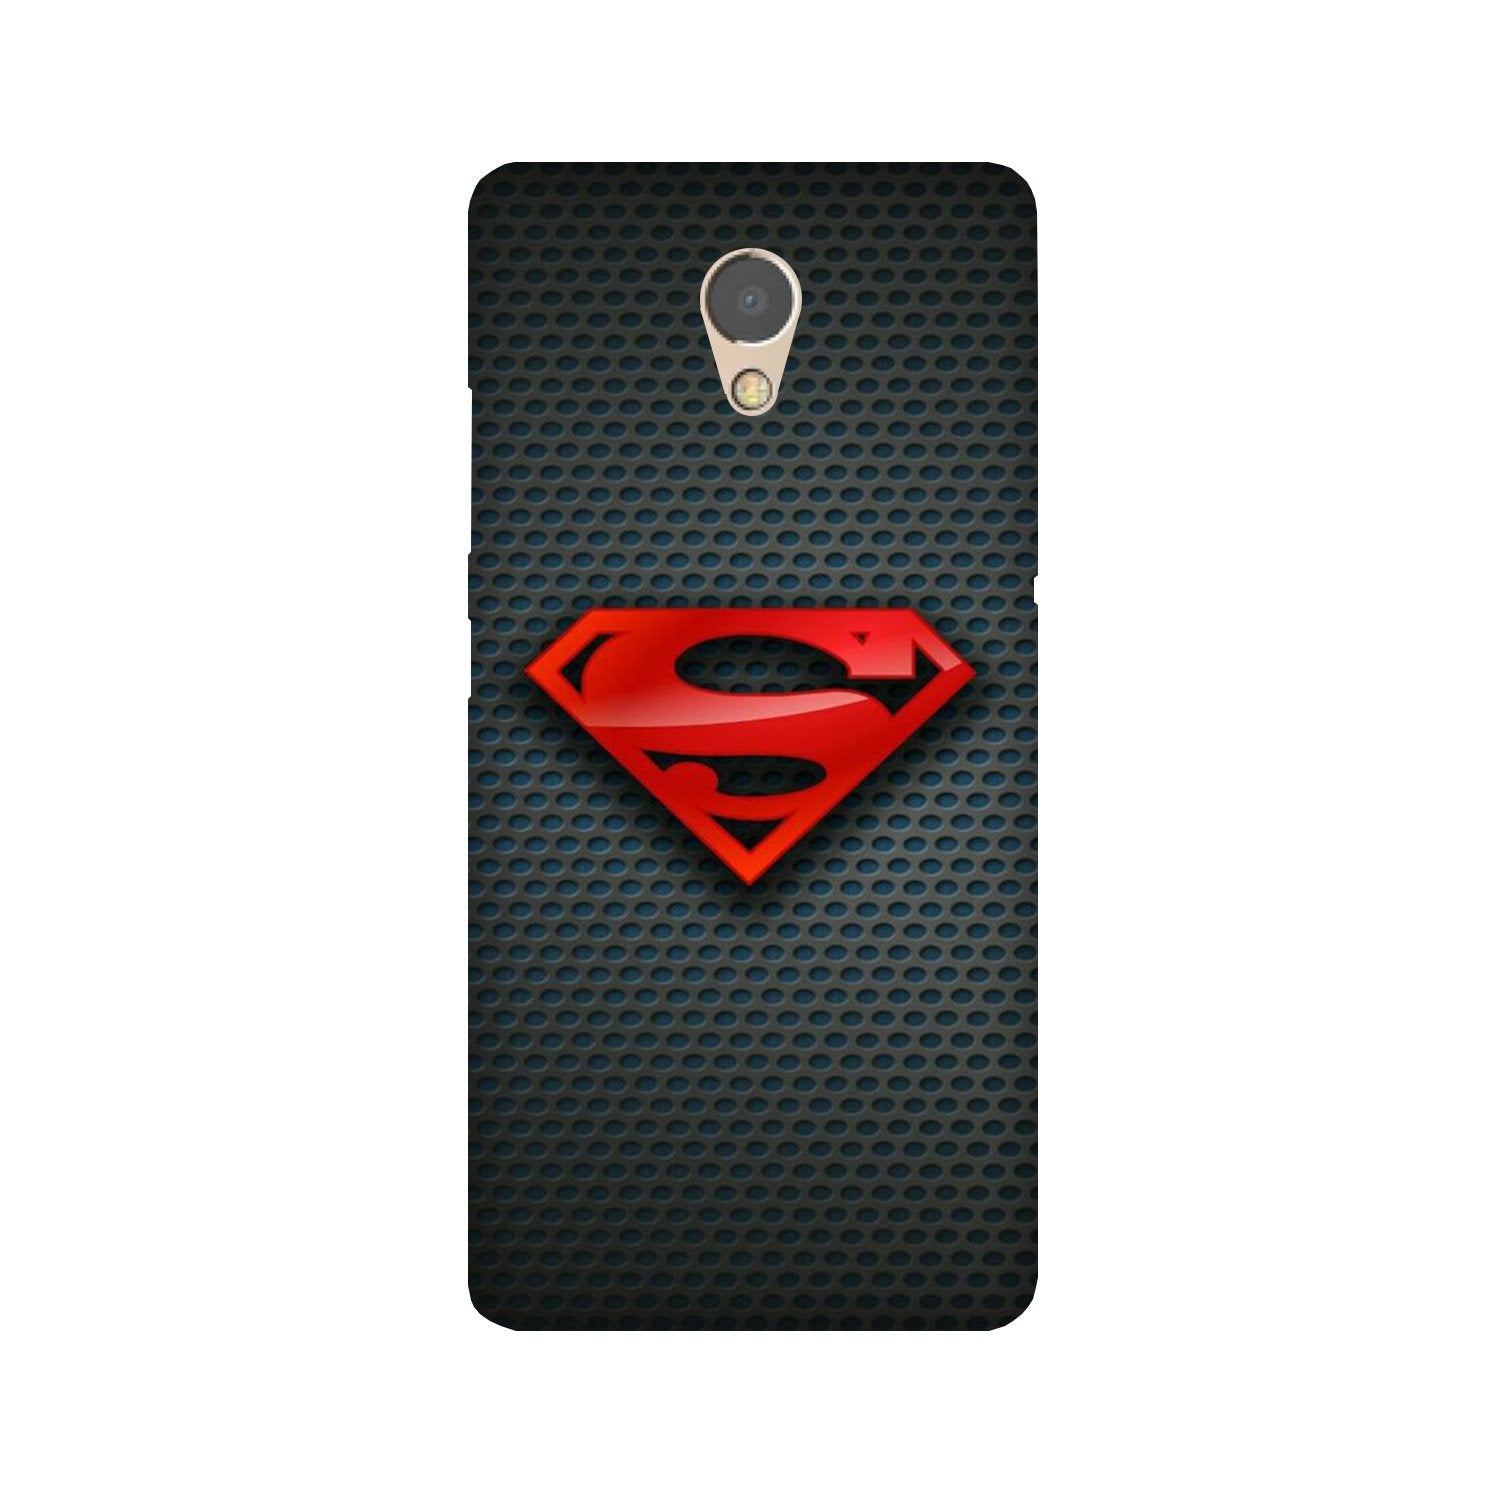 Superman Case for Lenovo P2 (Design No. 247)